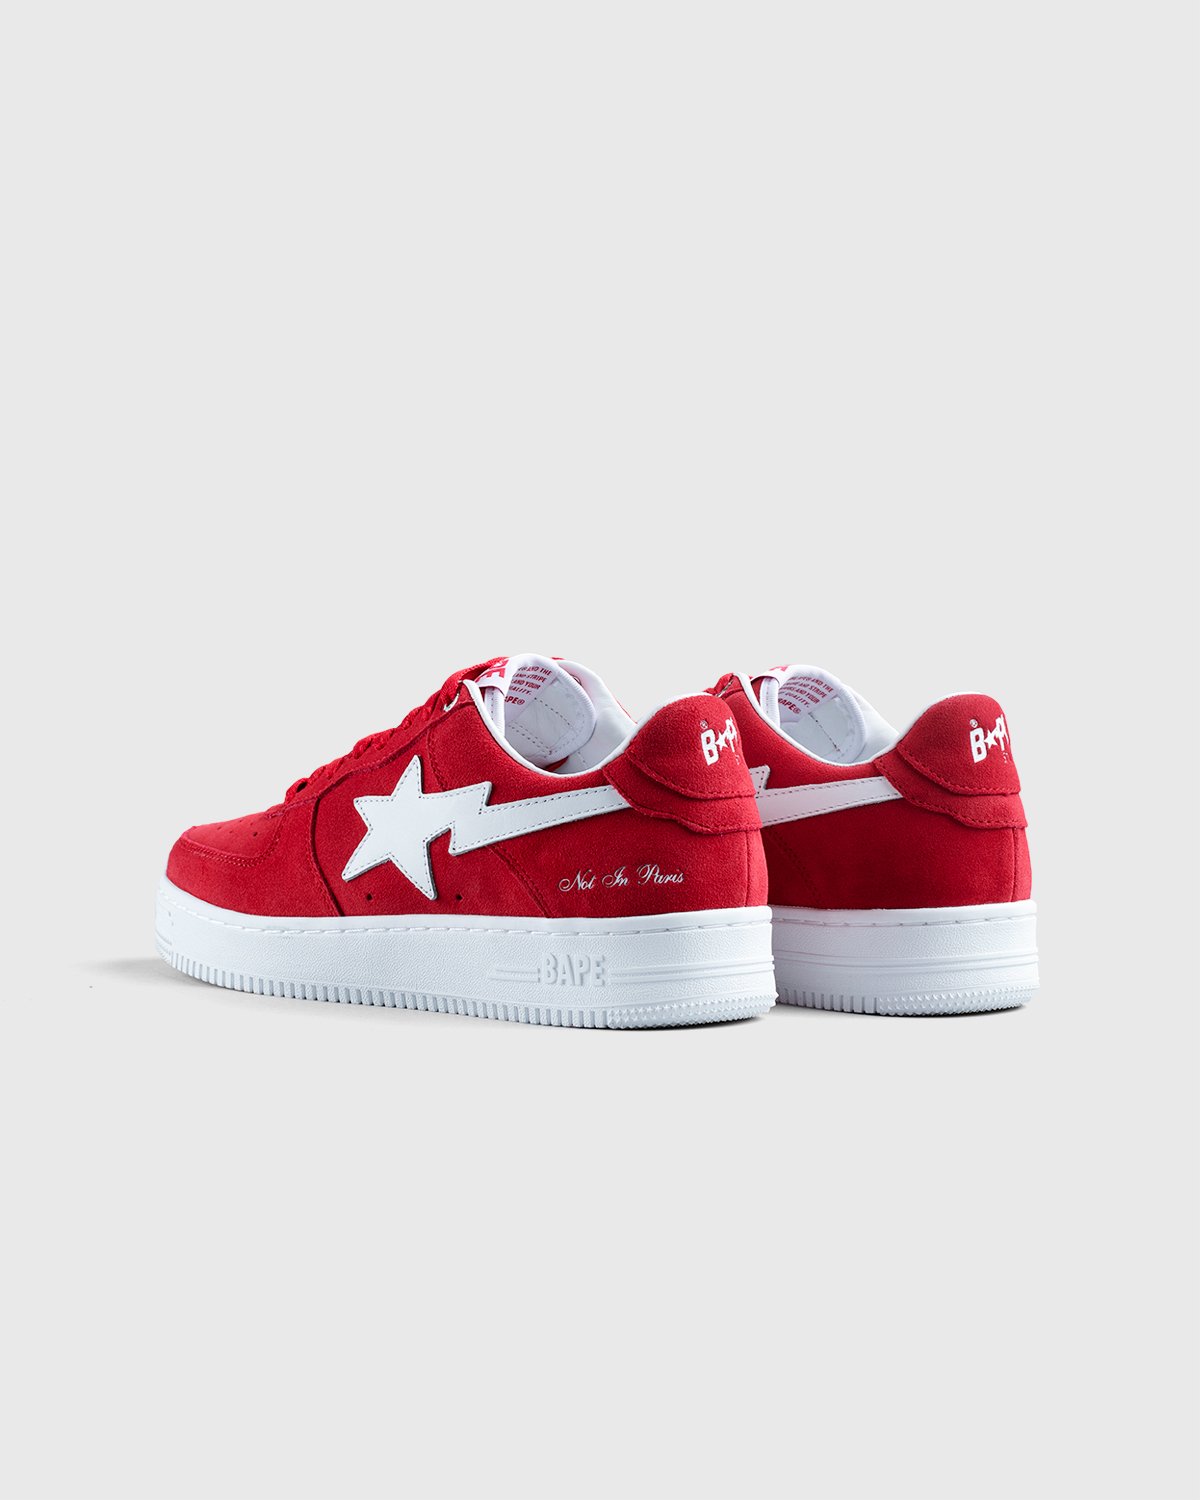 BAPE x Highsnobiety - BAPE STA Red - Footwear - Red - Image 3